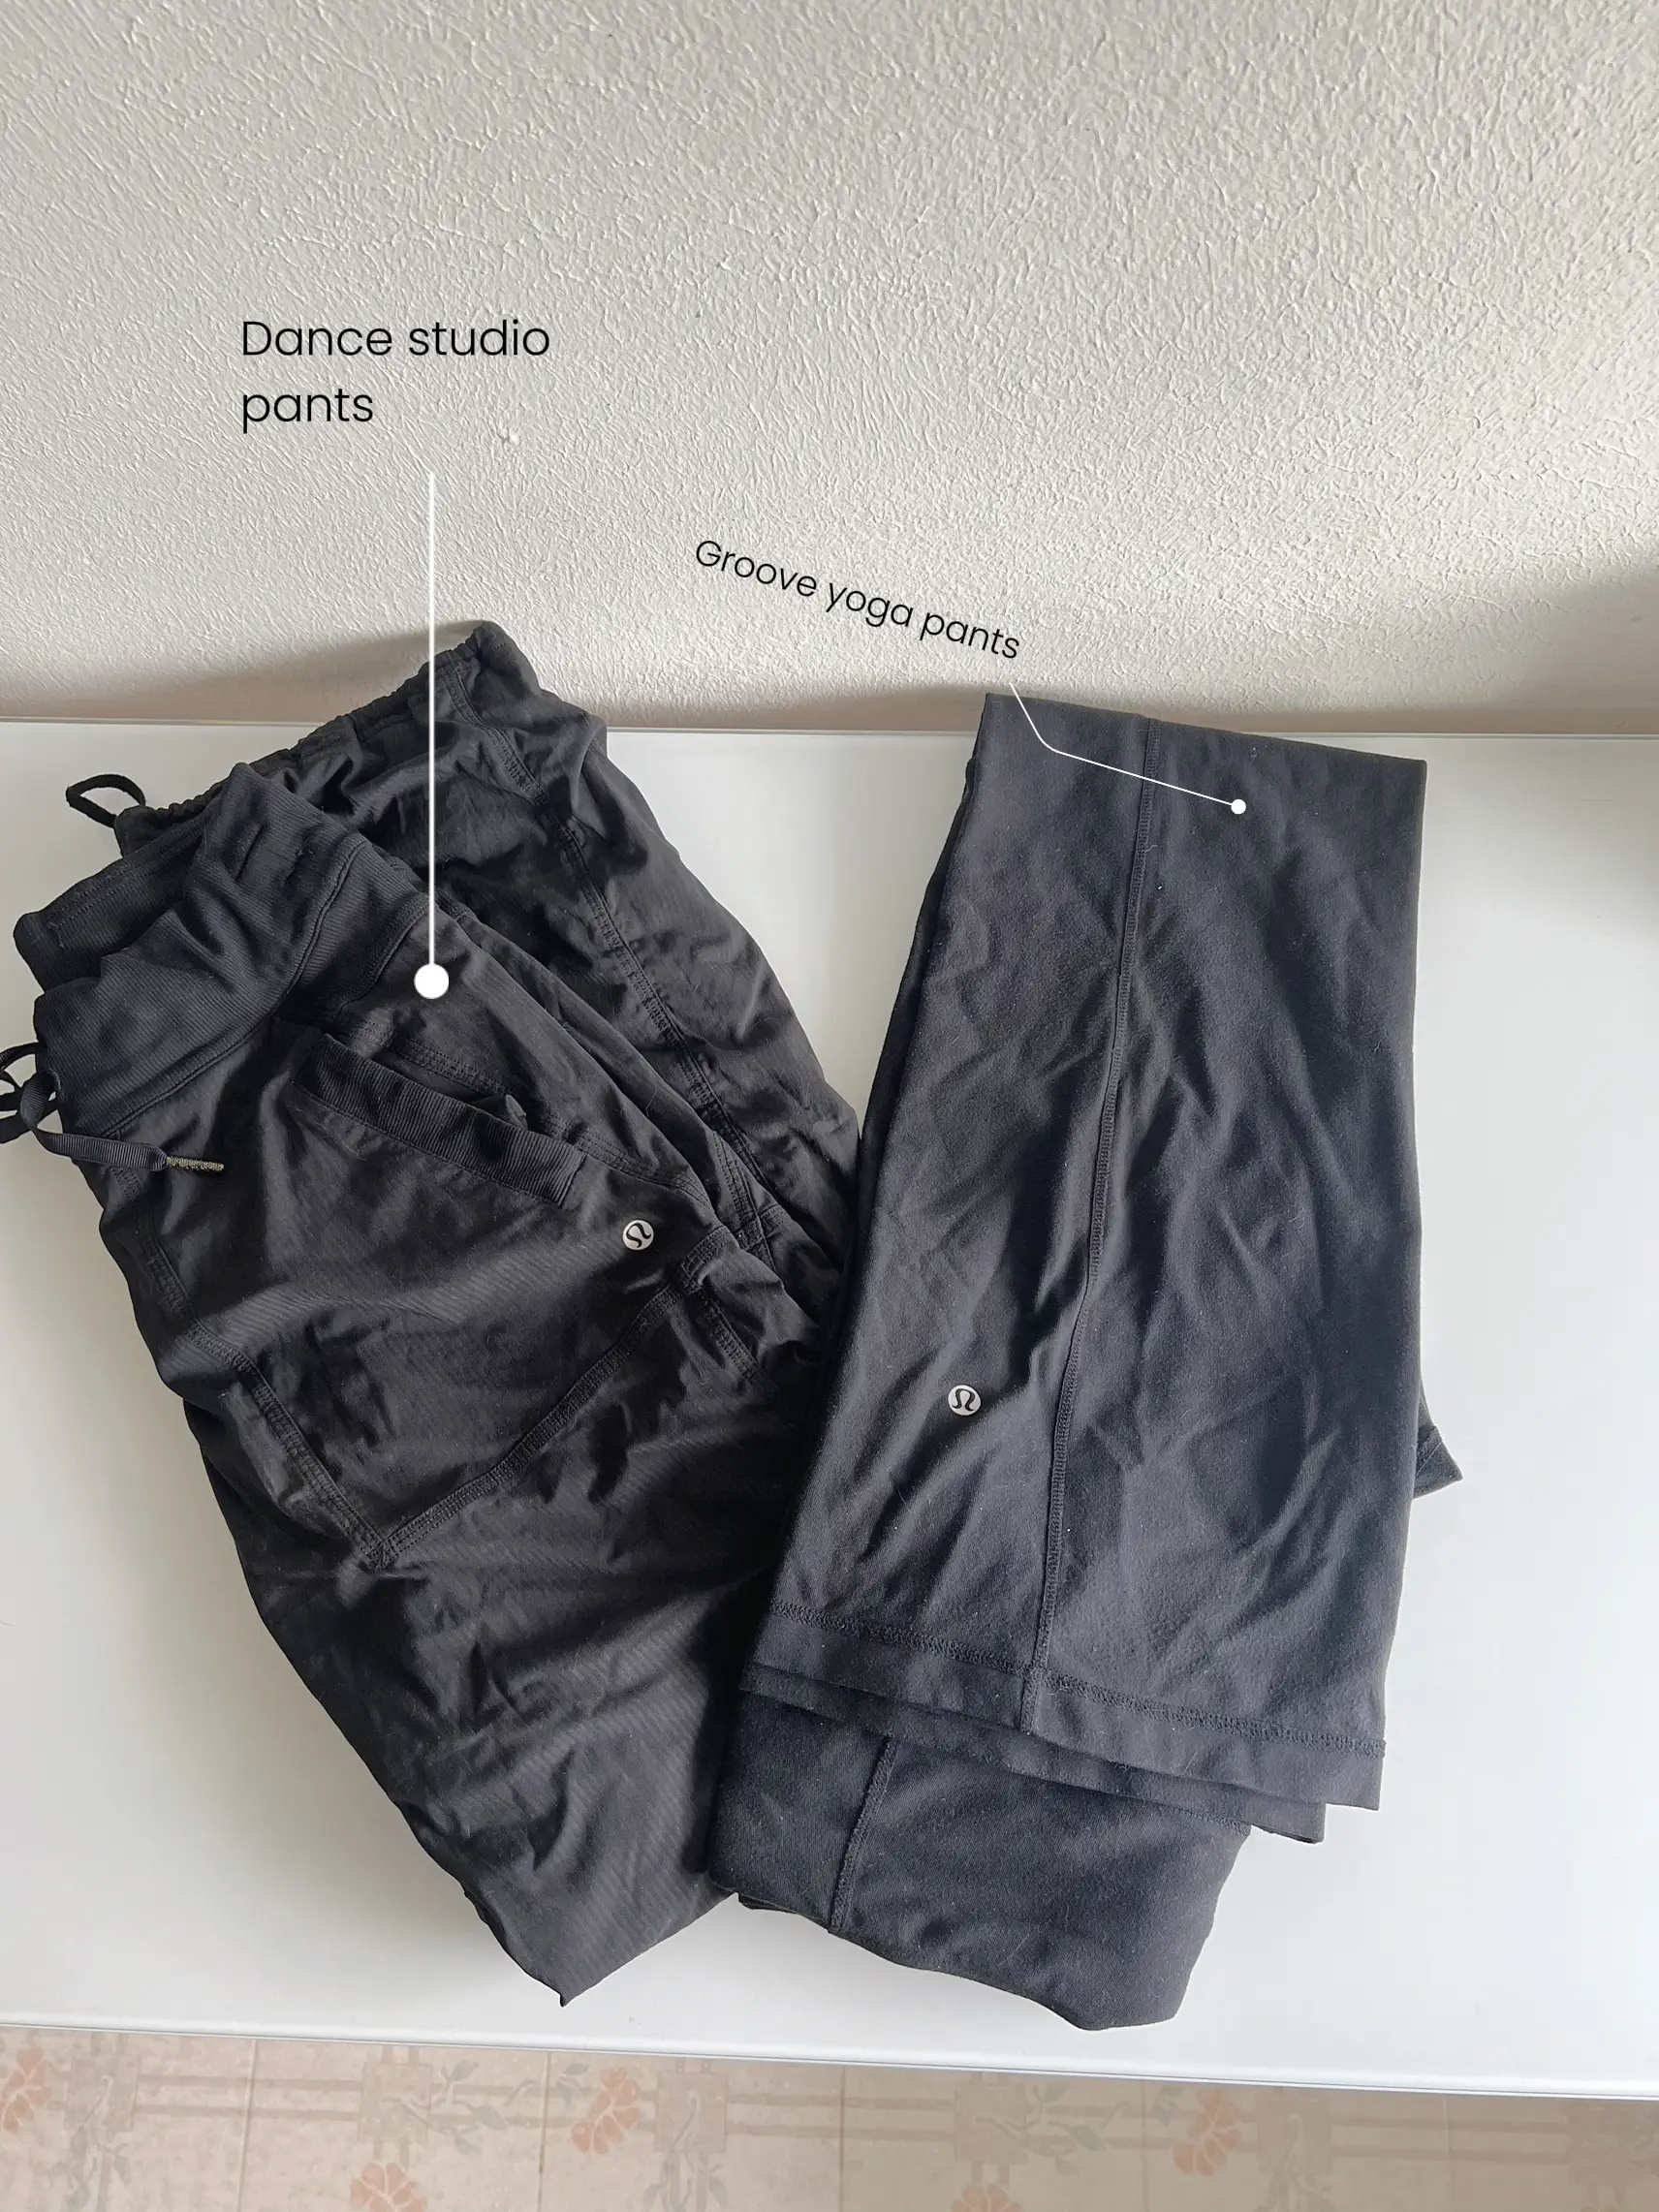 Lululemon pants, similar to dance studio pants in - Depop